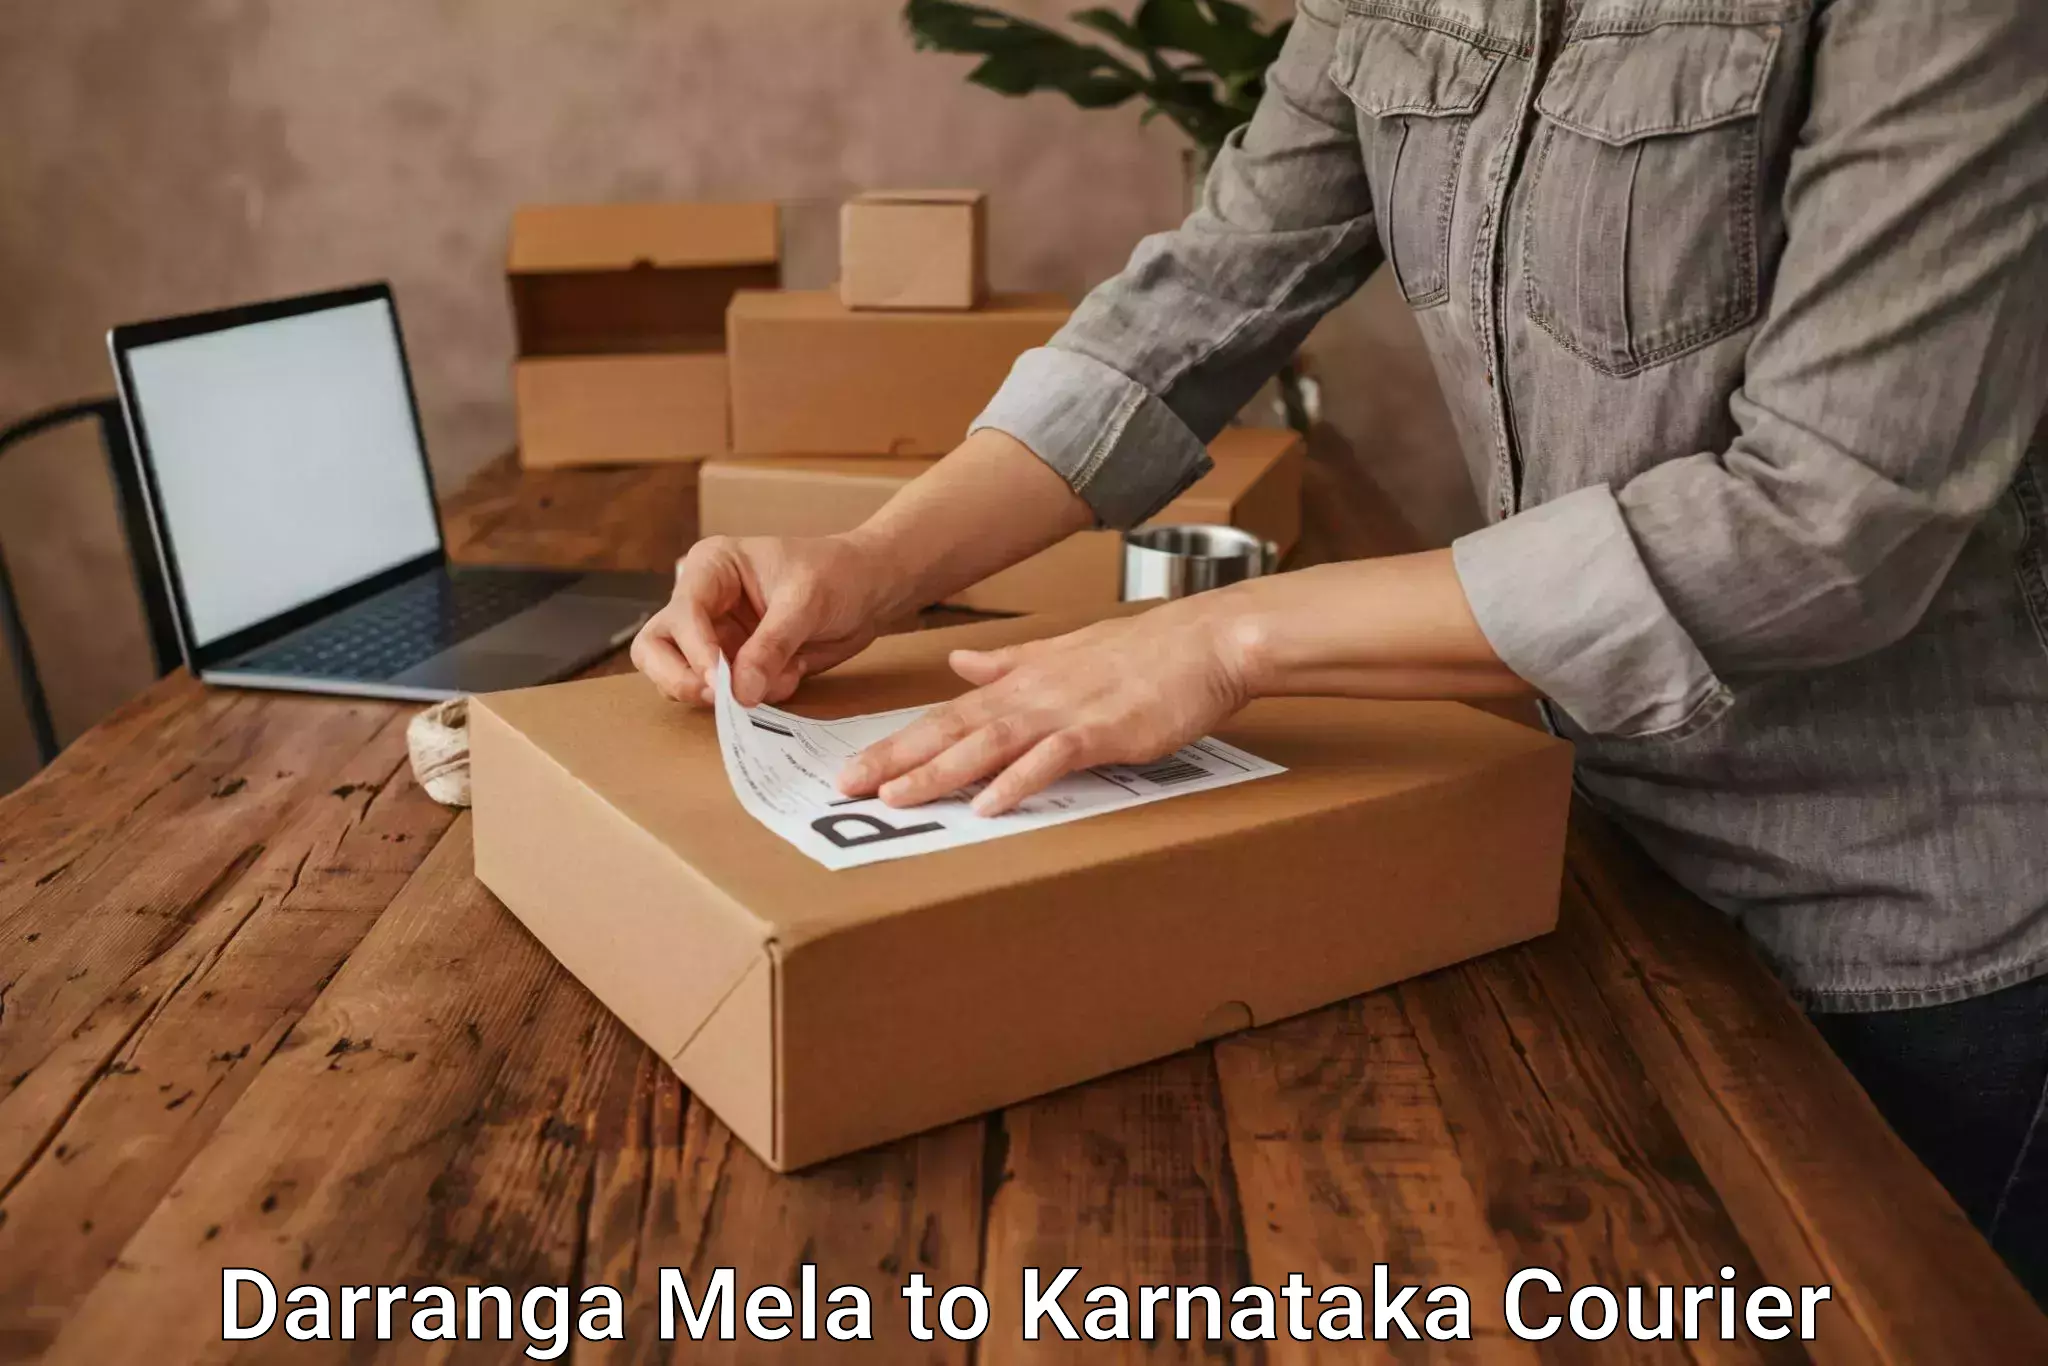 Reliable delivery network in Darranga Mela to Karnataka